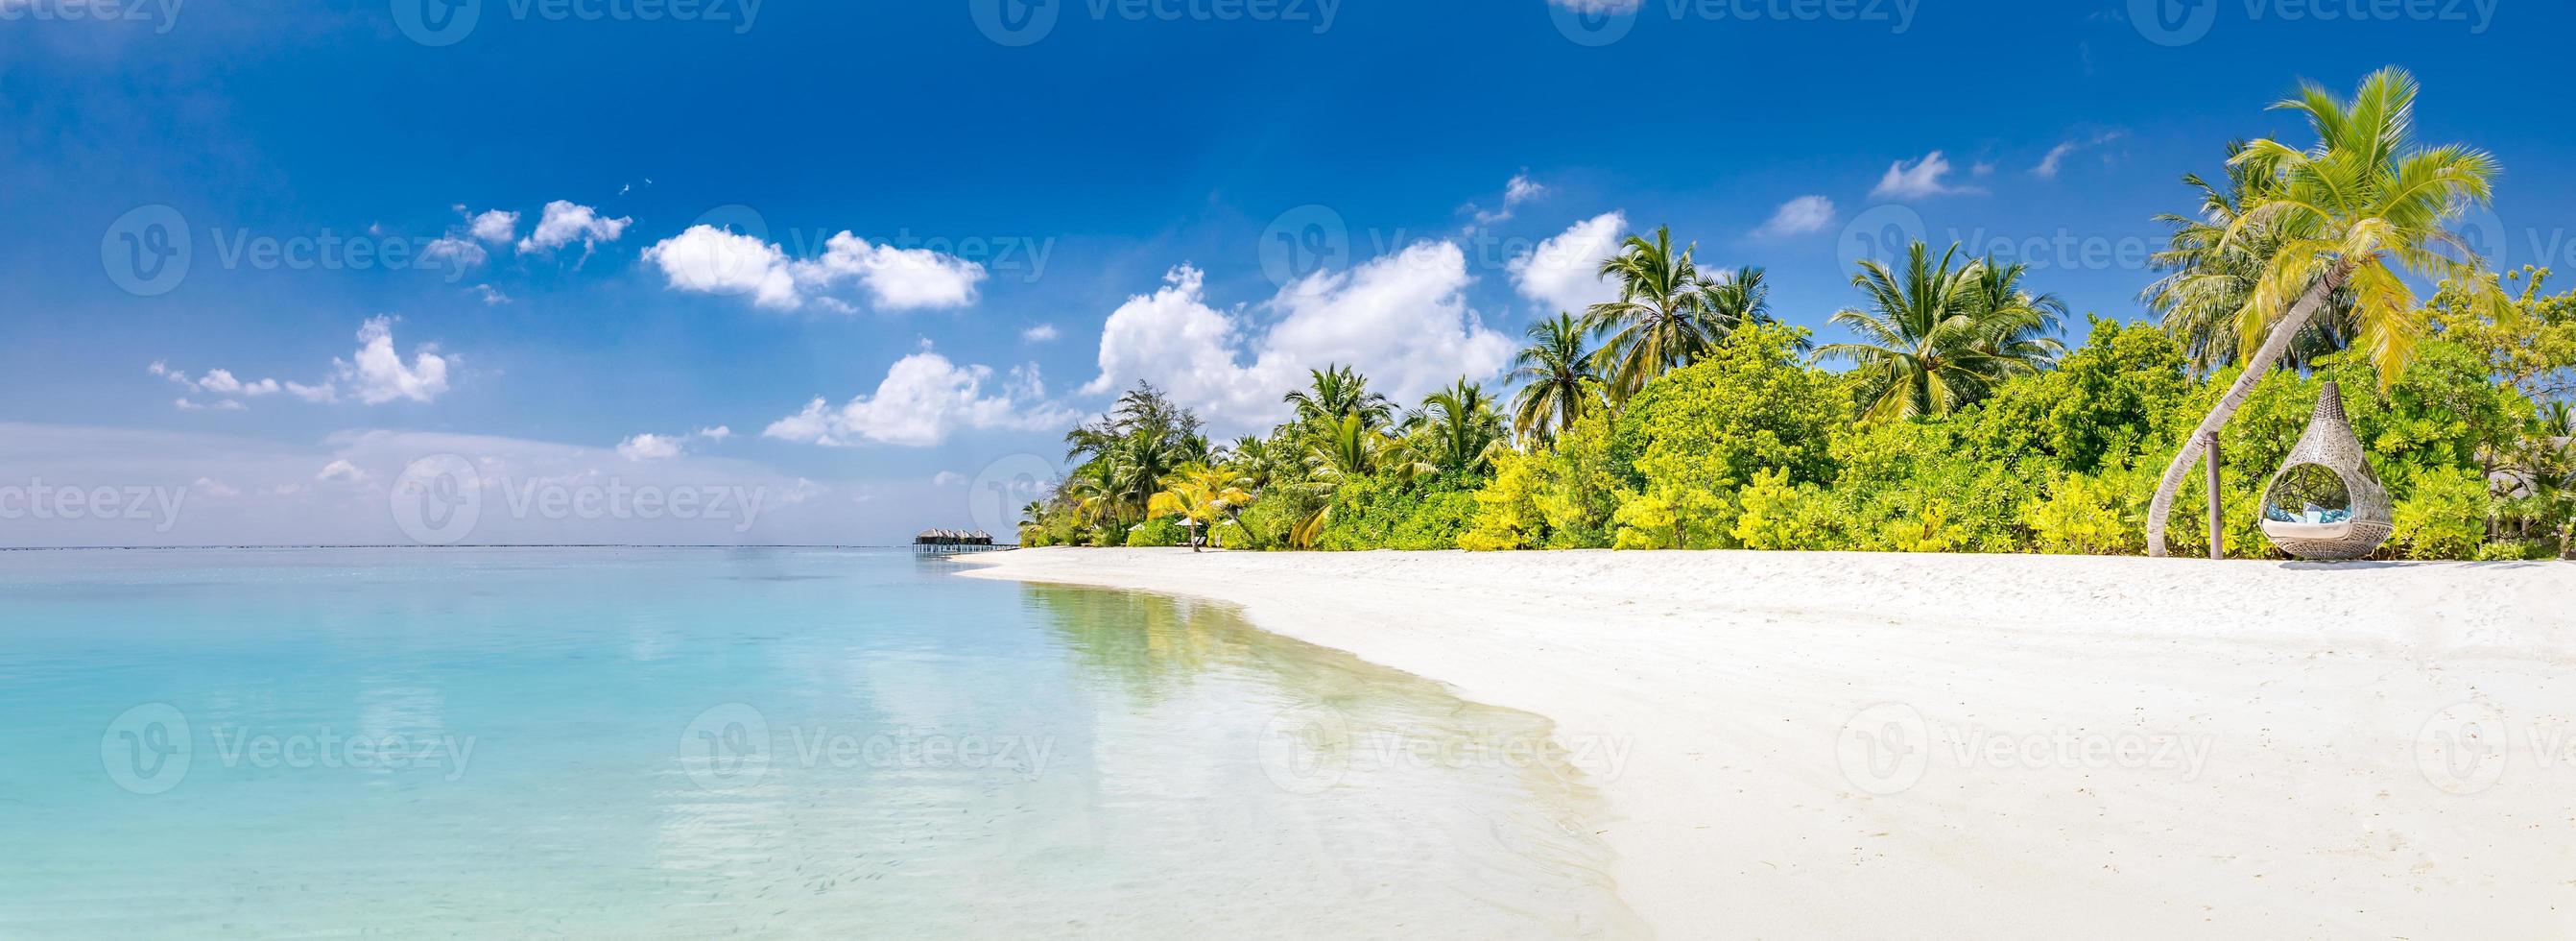 skön tropisk strand baner. vit sand och kokospalm palmer resa turism bred panorama- bakgrund begrepp. Fantastisk strand landskap, blå himmel, handflatan träd under solig himmel. exotisk strand panorama foto